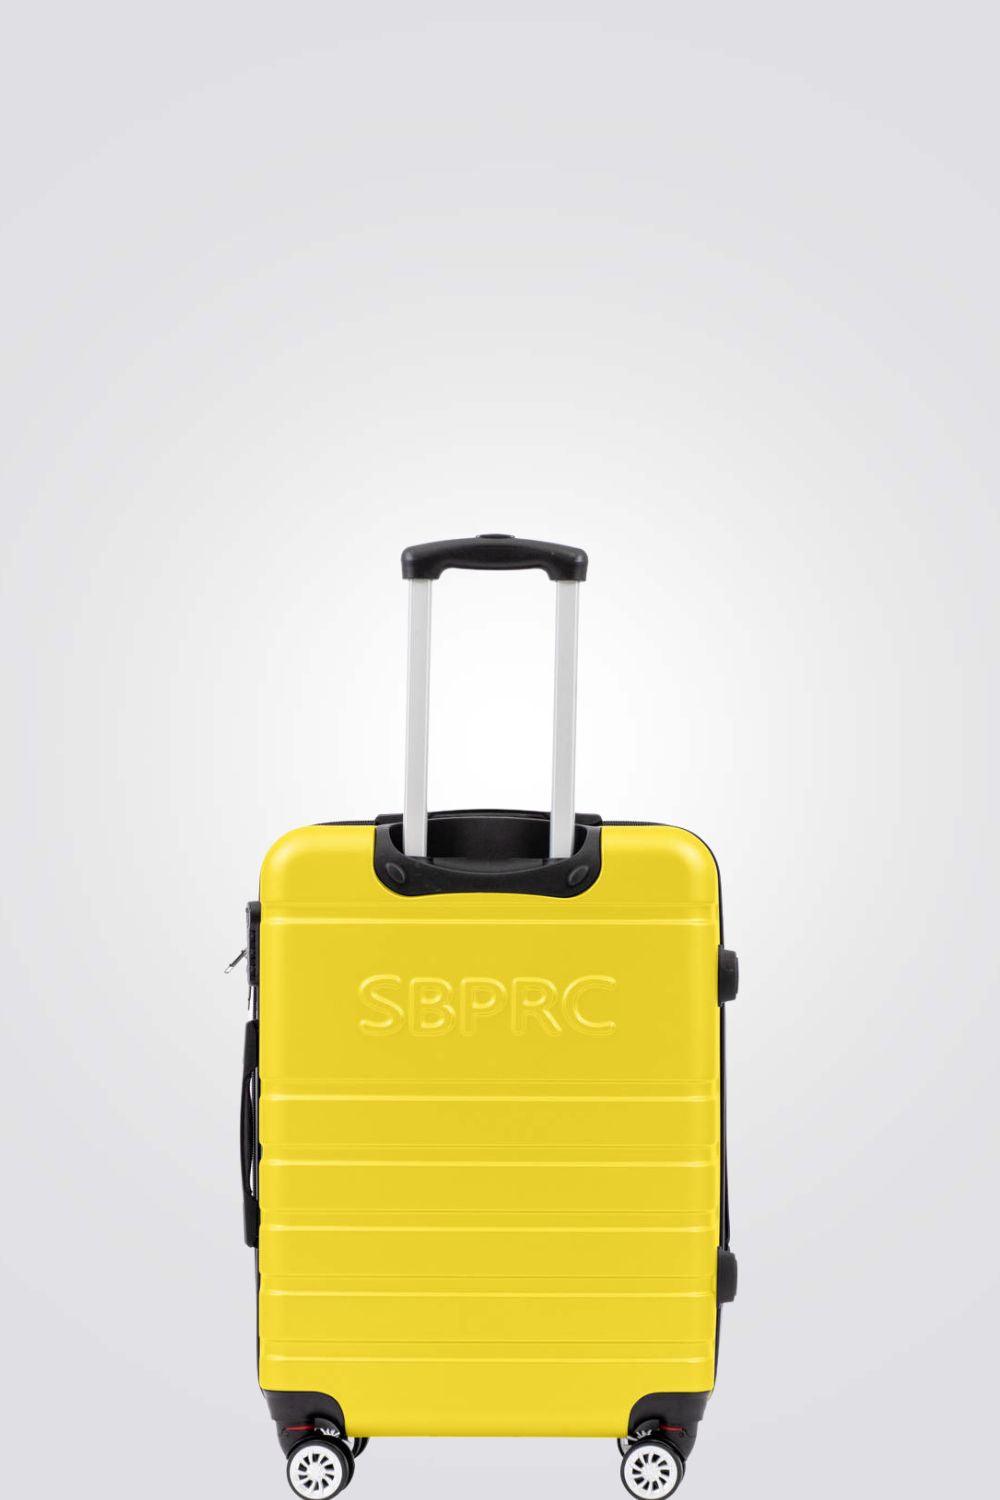 SANTA BARBARA POLO & RAQUET CLUB - מזוודה טרולי עלייה למטוס 20" דגם 1807 בצבע צהוב - MASHBIR//365